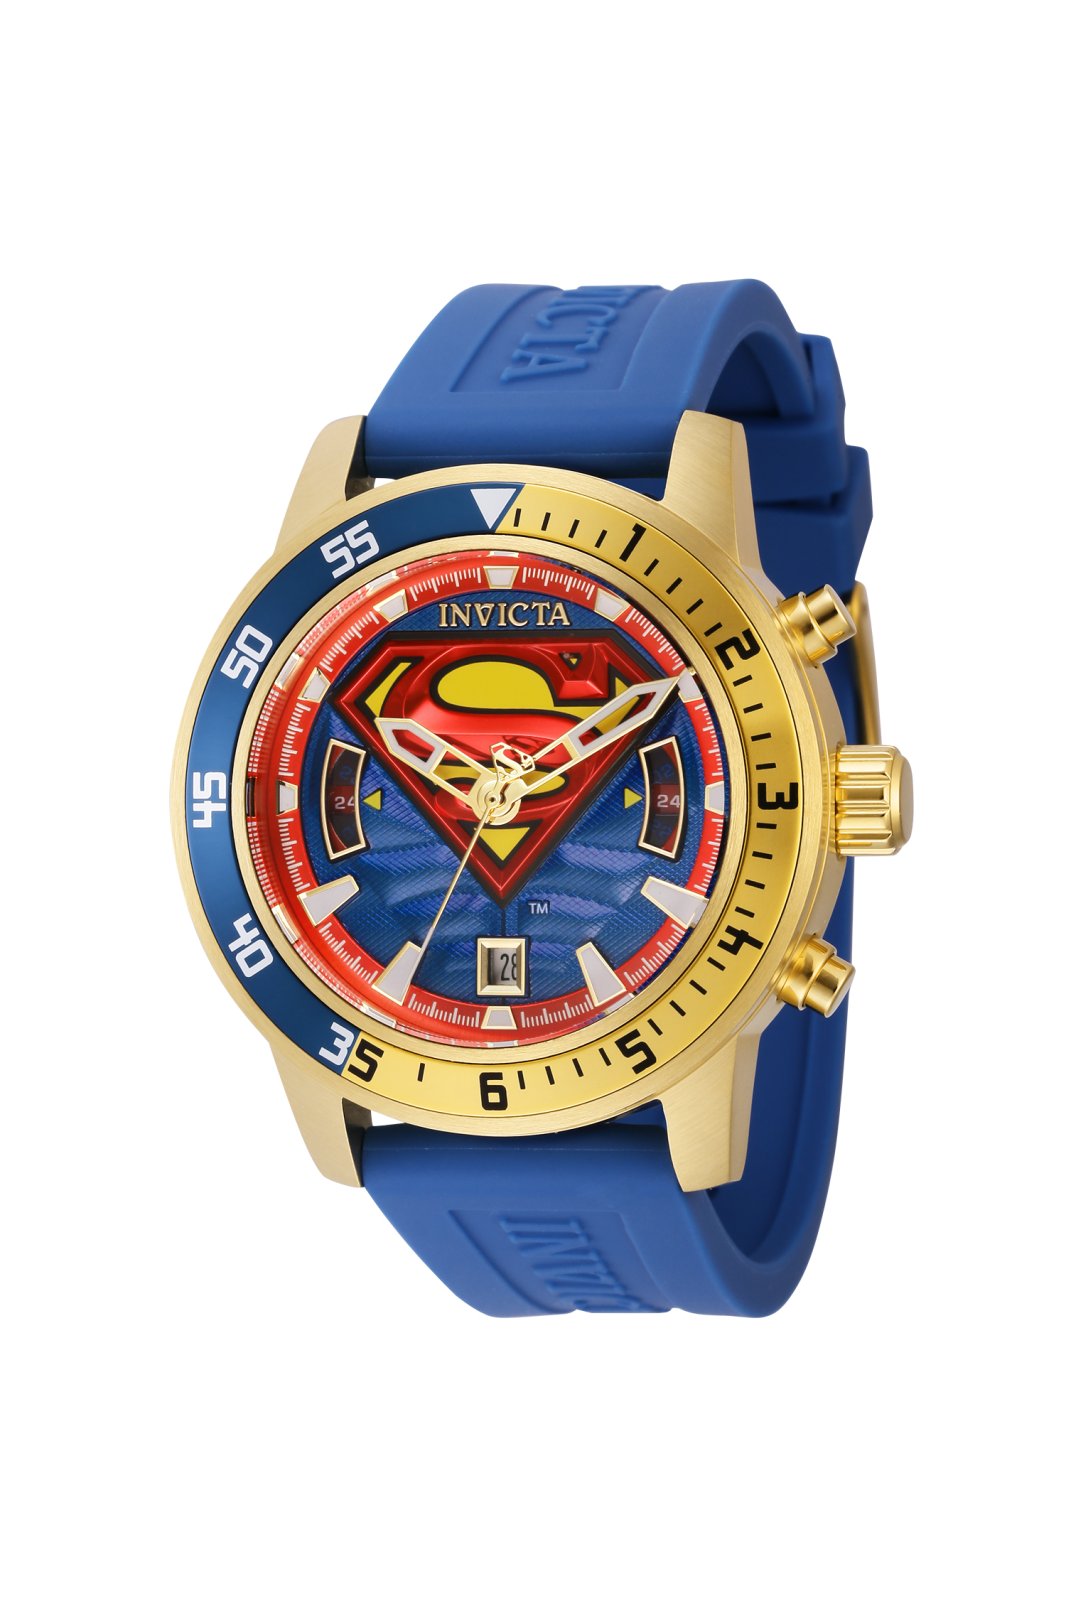 Invicta Watch - Superman 43589 - Invicta - Buy Online!